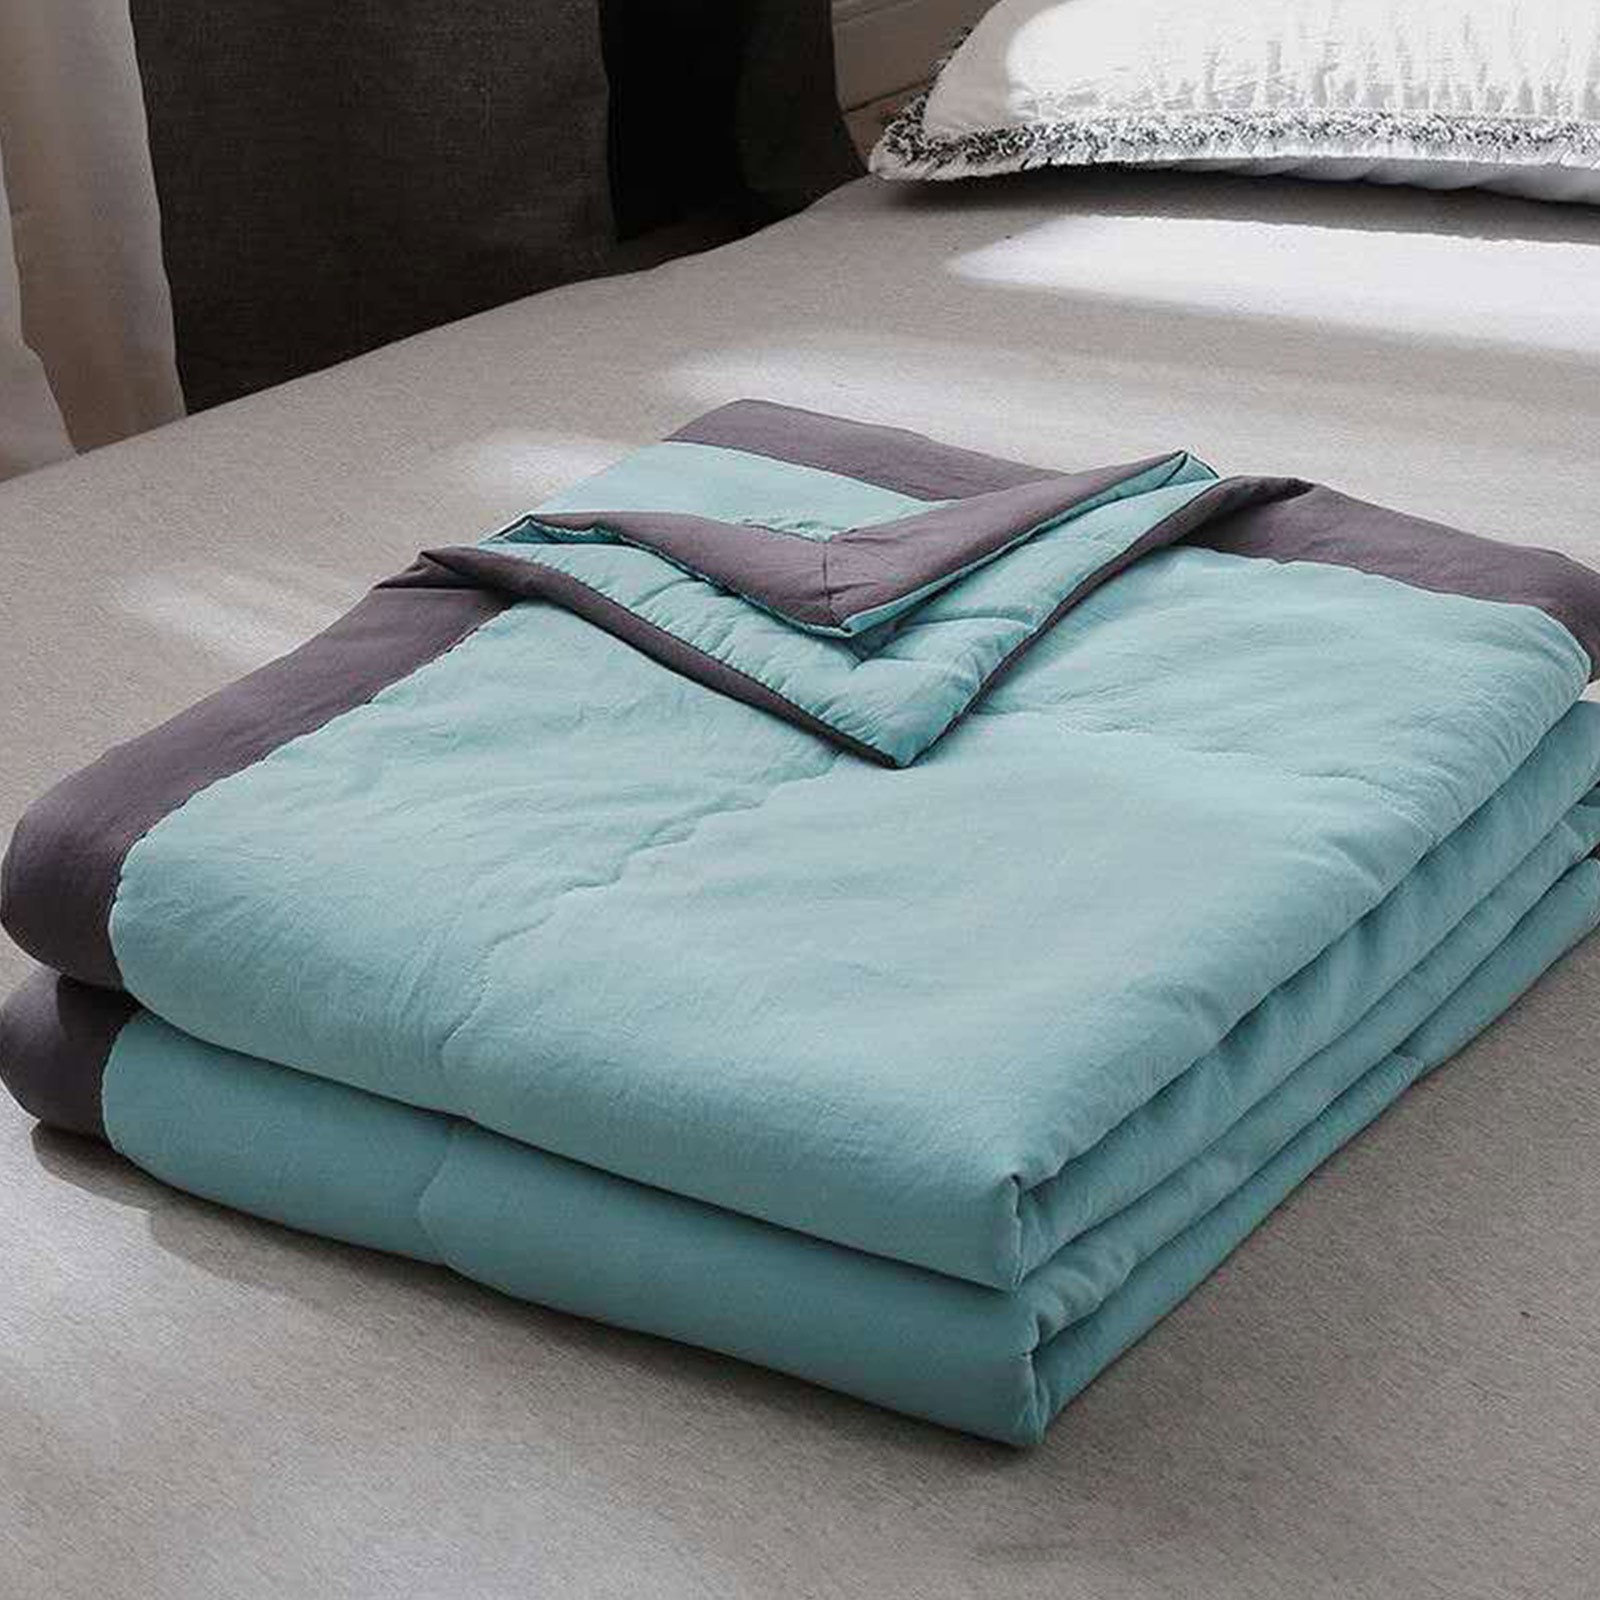 Cooling Blanket Queen Size,39.3*51.2 Inch Lightweight Cotton Summer ...